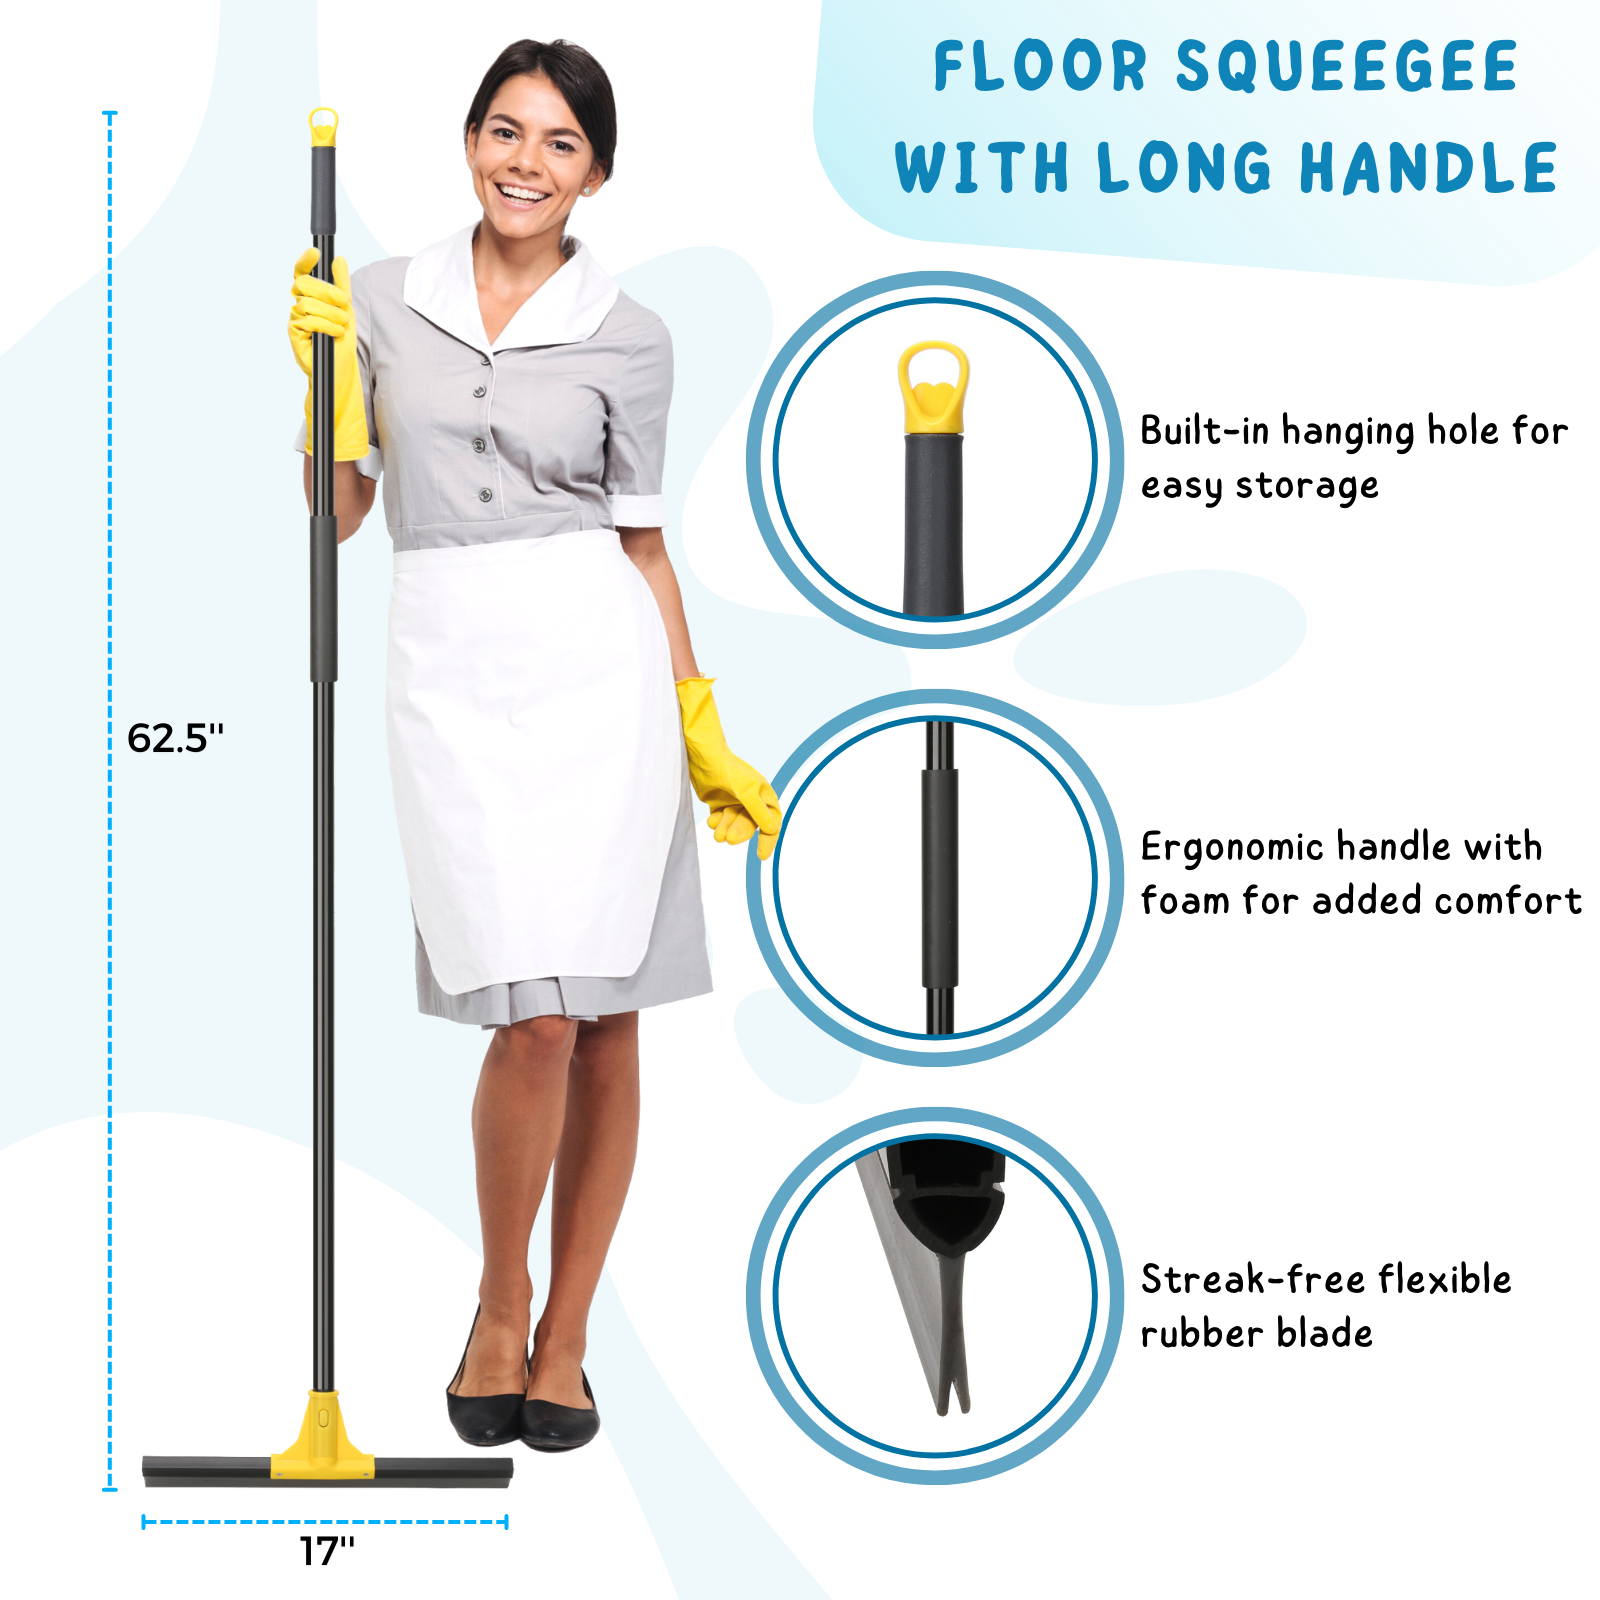 Squeegee Floor Cleaning, Floor Squeegee Heavy Duty